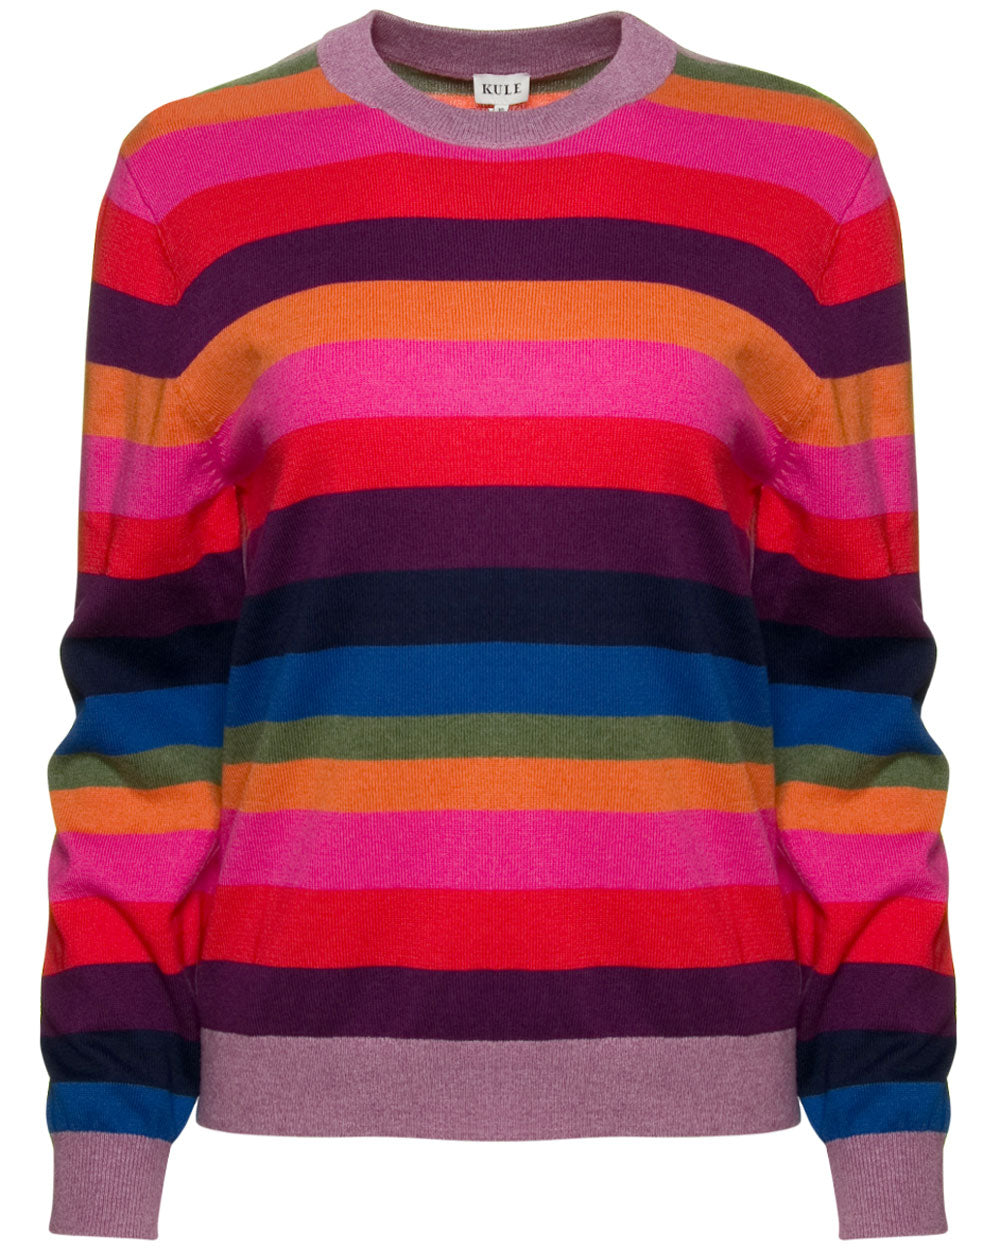 The Sheddy Sweater in Rainbow Stripe